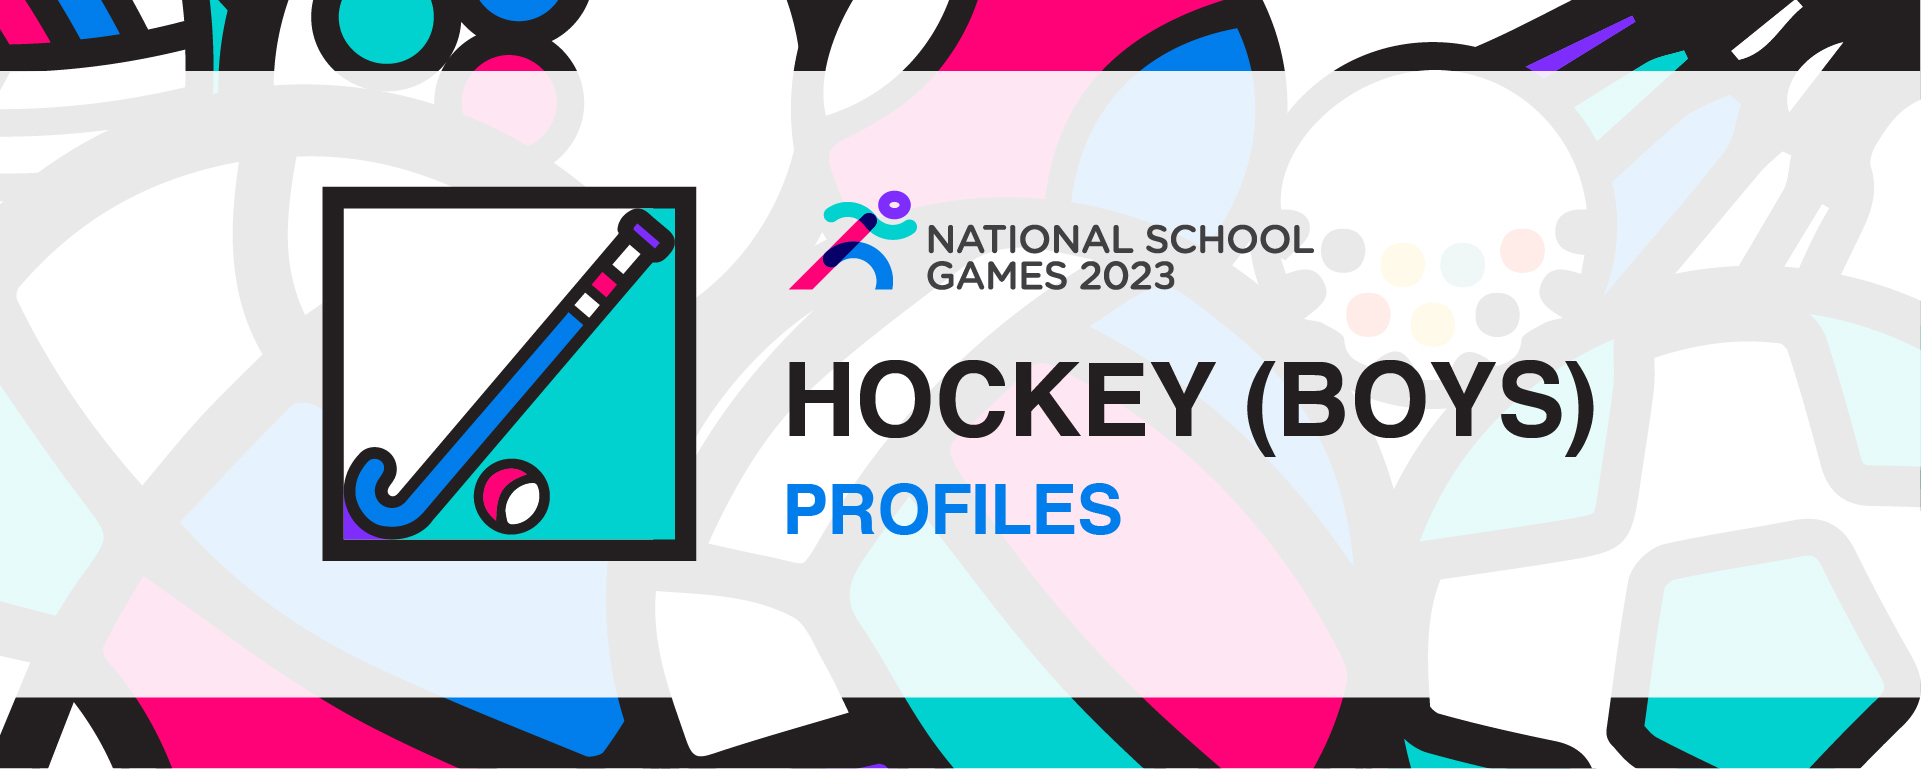 National School Games 2023 | Hockey | Profiles